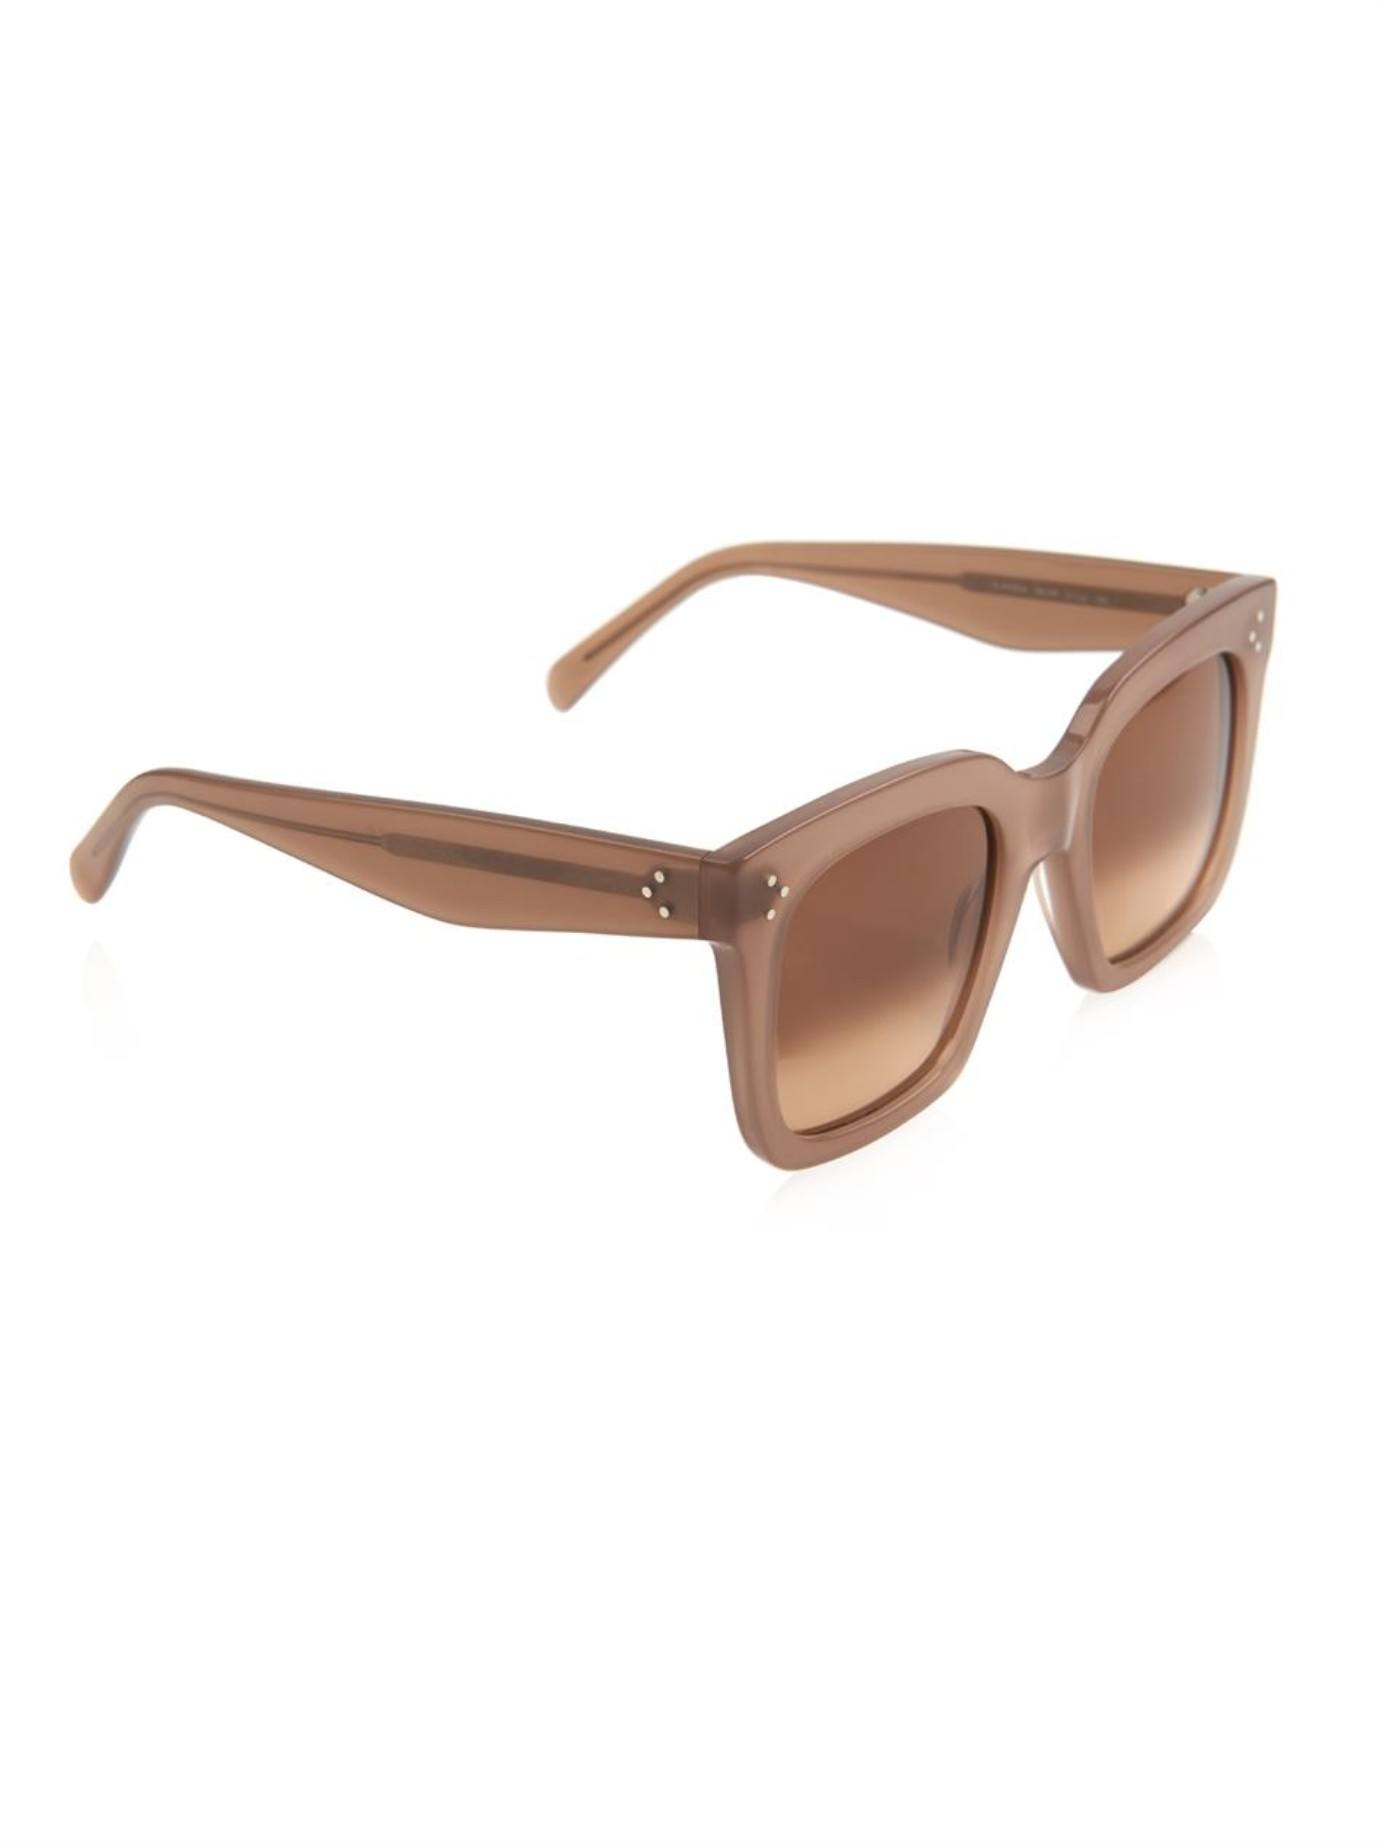 Celine Square-Framed Acetate Sunglasses in Light Brown (Brown) - Lyst